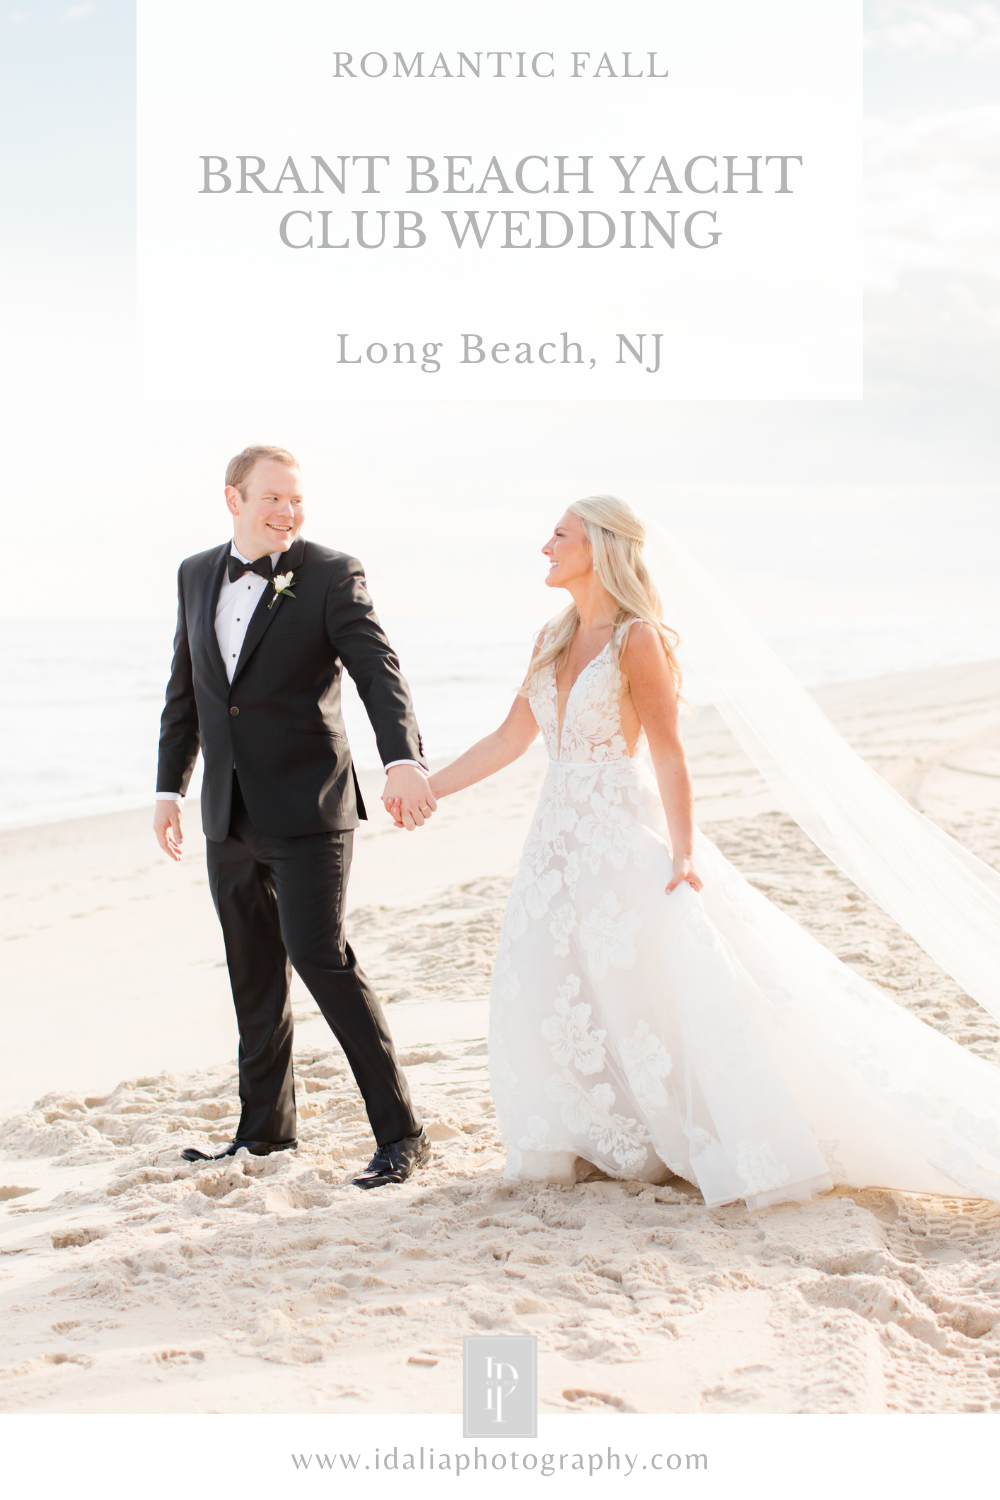 Fall Wedding at Brant Beach Yacht Club in New Jersey photographed by NJ wedding photographer Idalia Photography